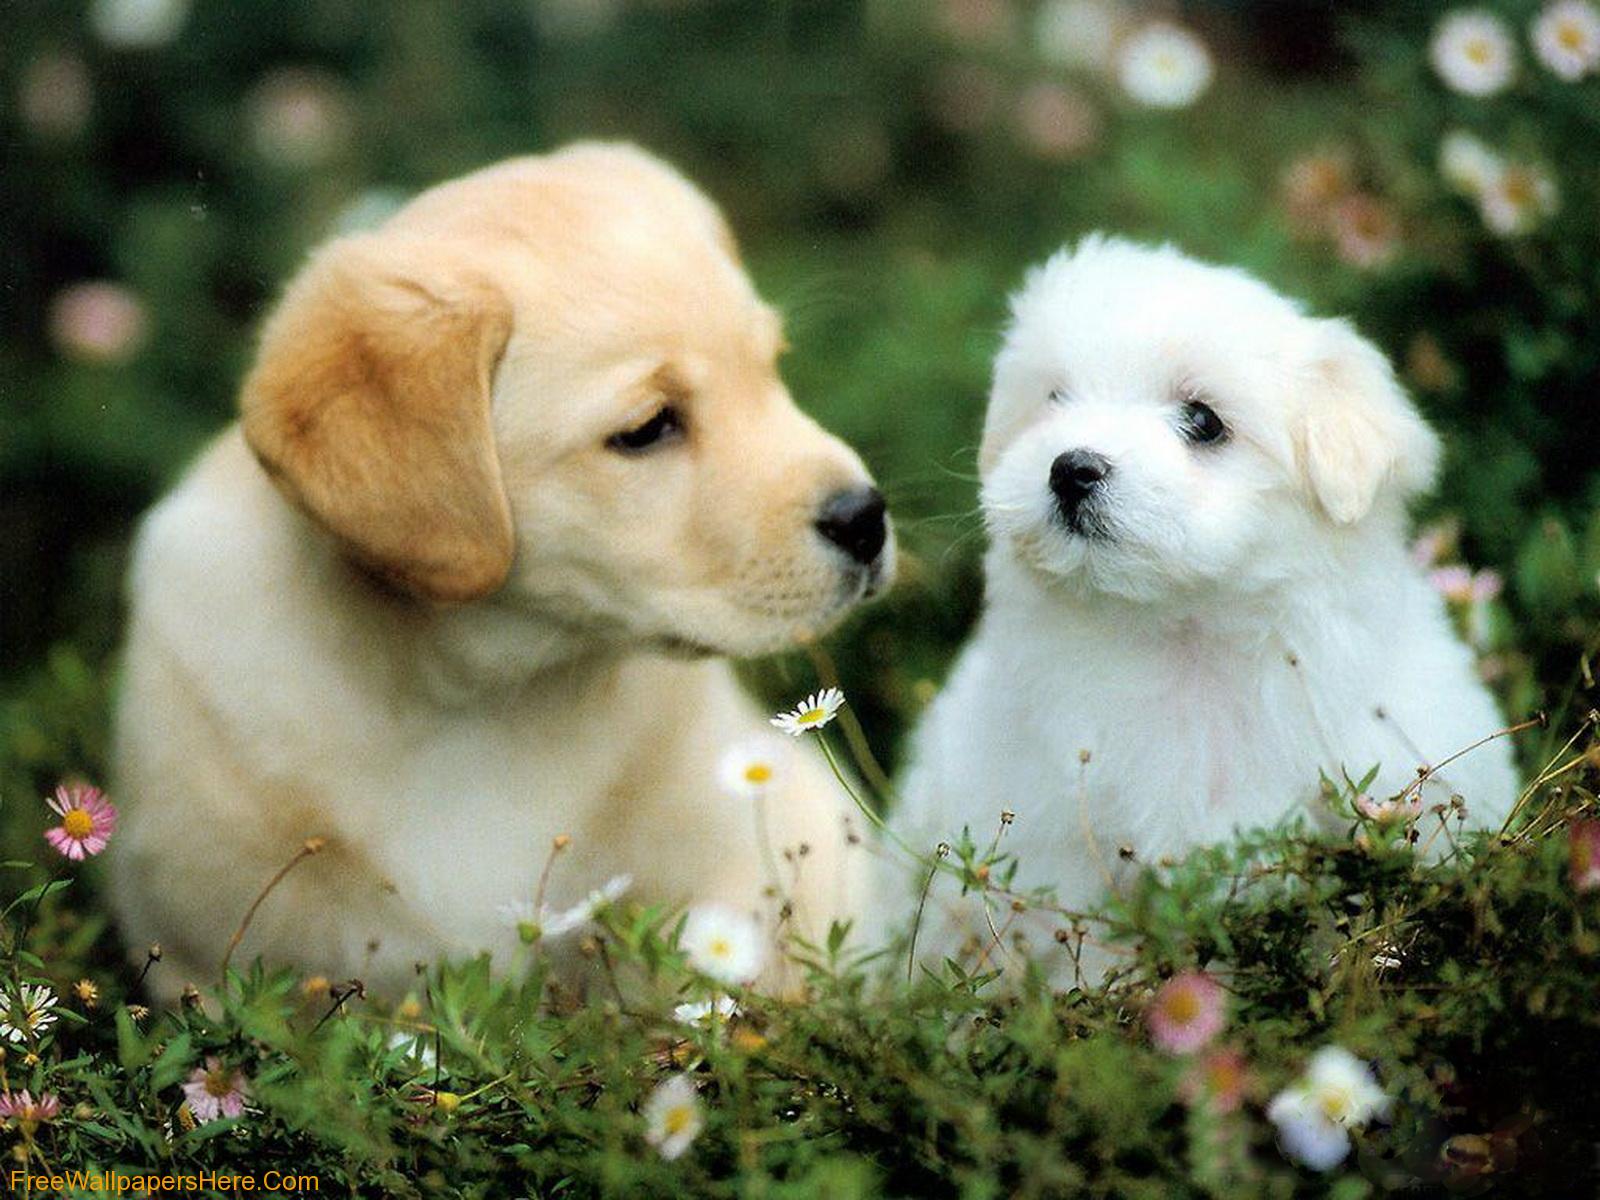 Wallpaper Gallery: Cute Puppies Wallpaper